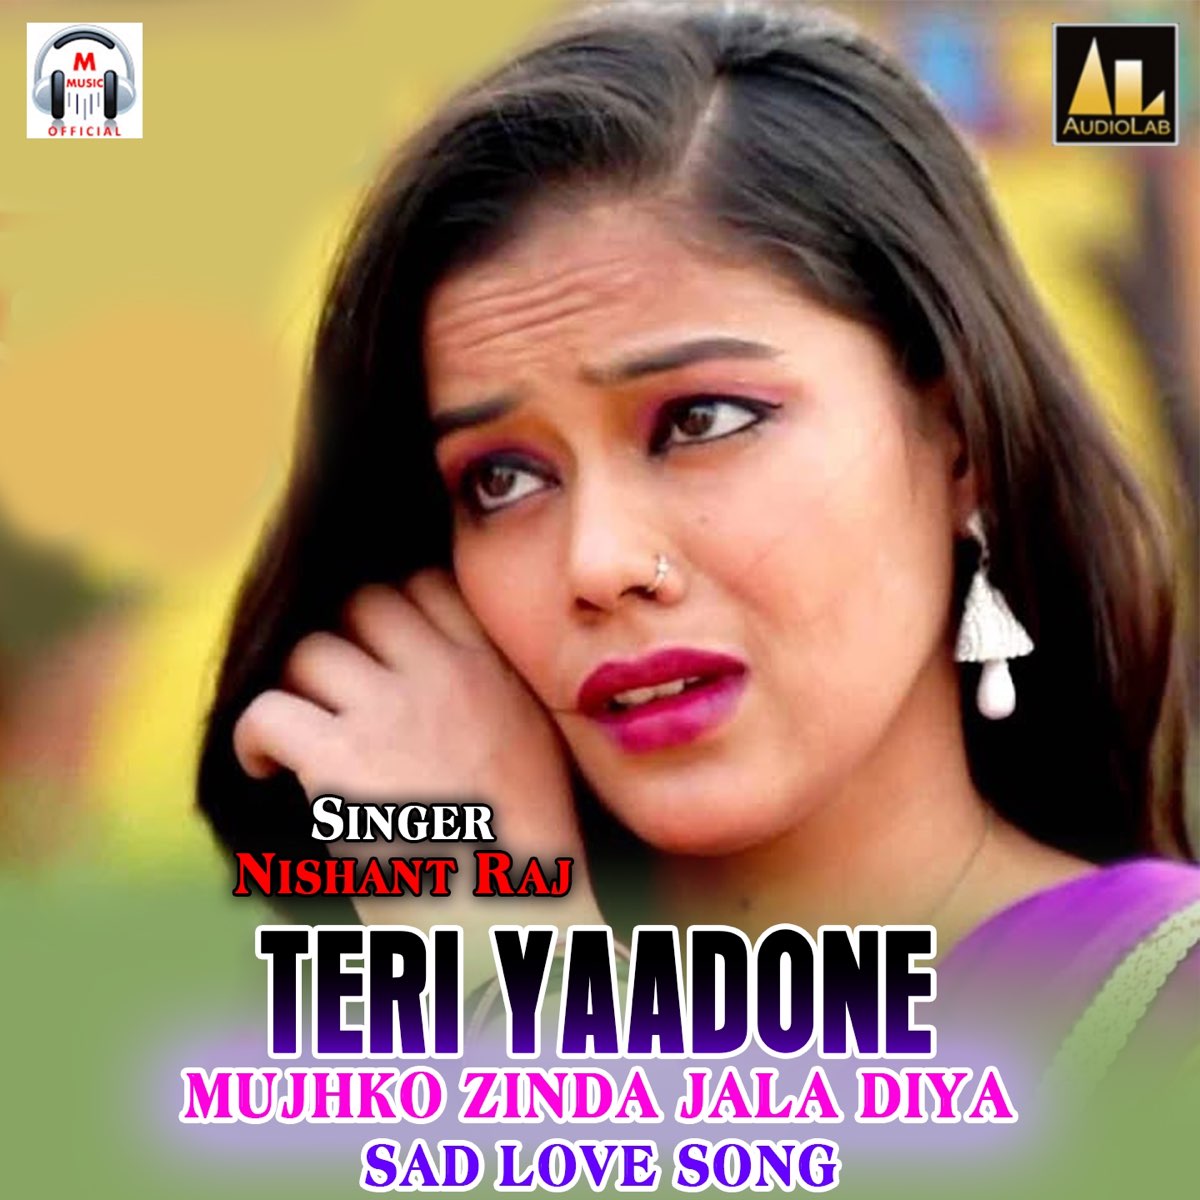 Teri Yaadone Mujhko Zinda Jala Diya-Sad Love Song - Single by Nishant Raj  on Apple Music